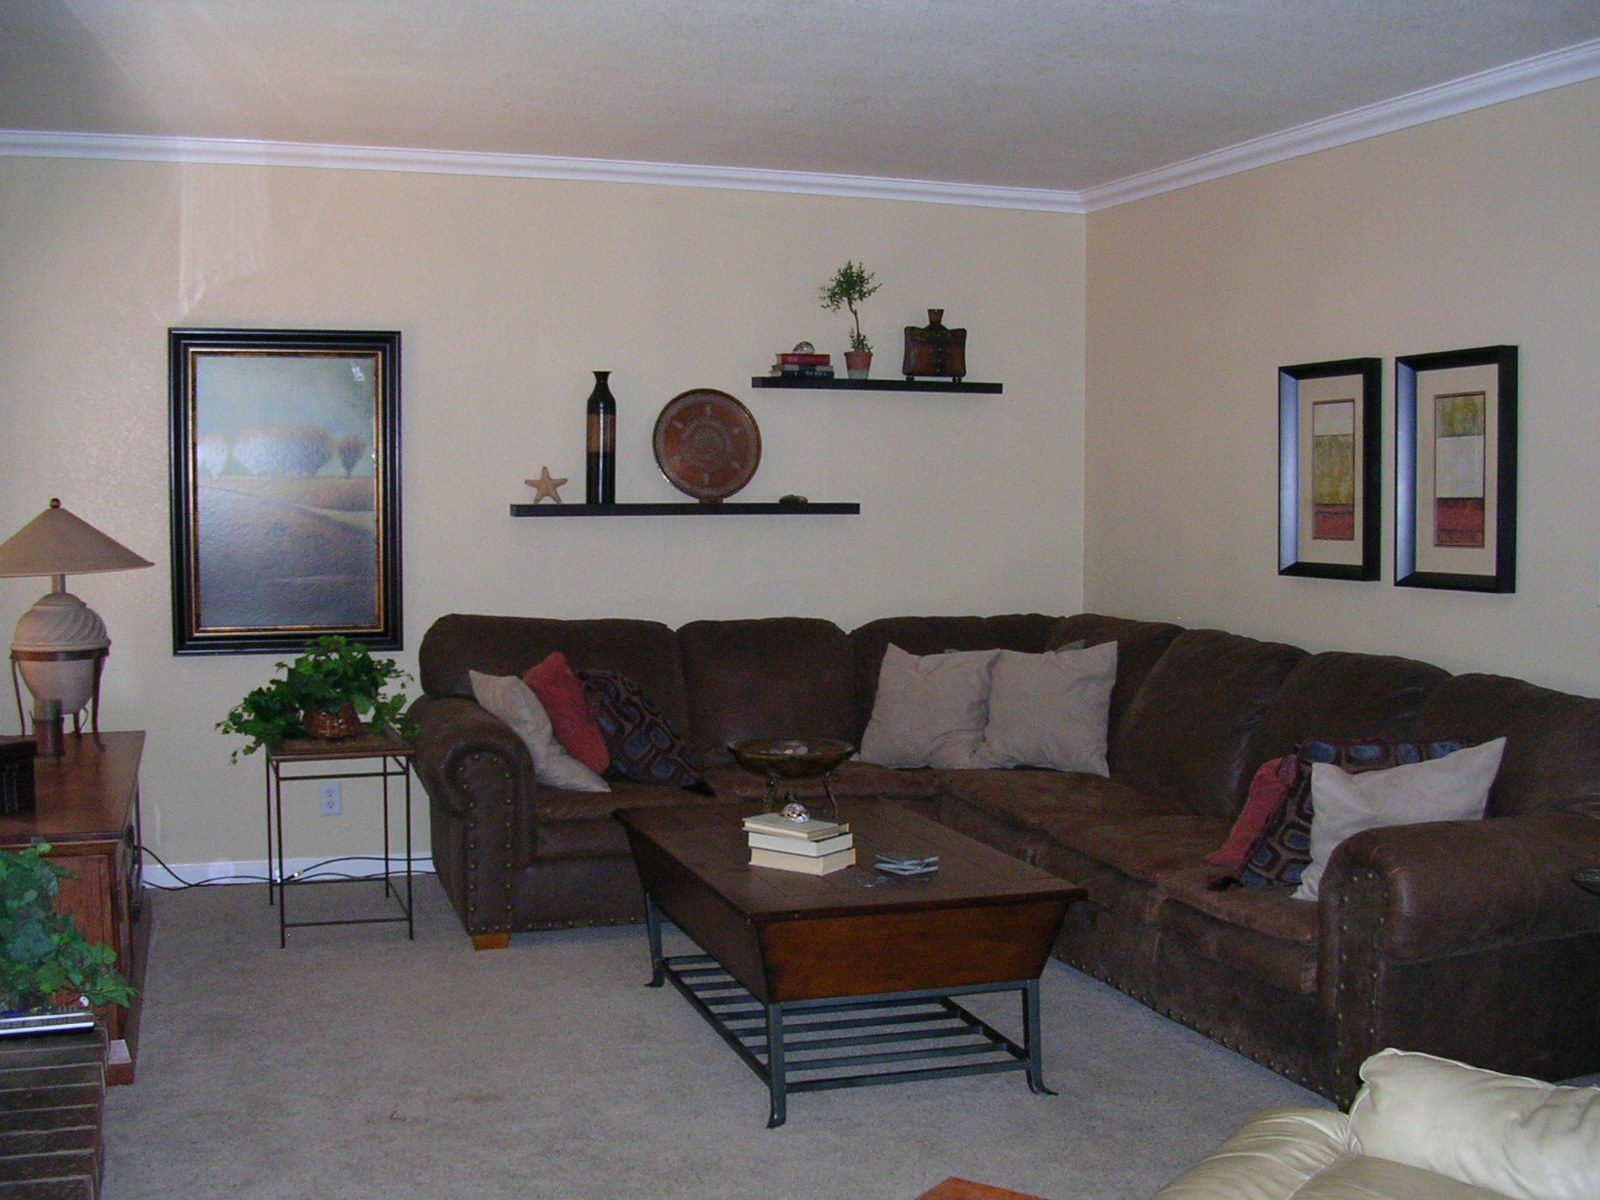 Living room area.